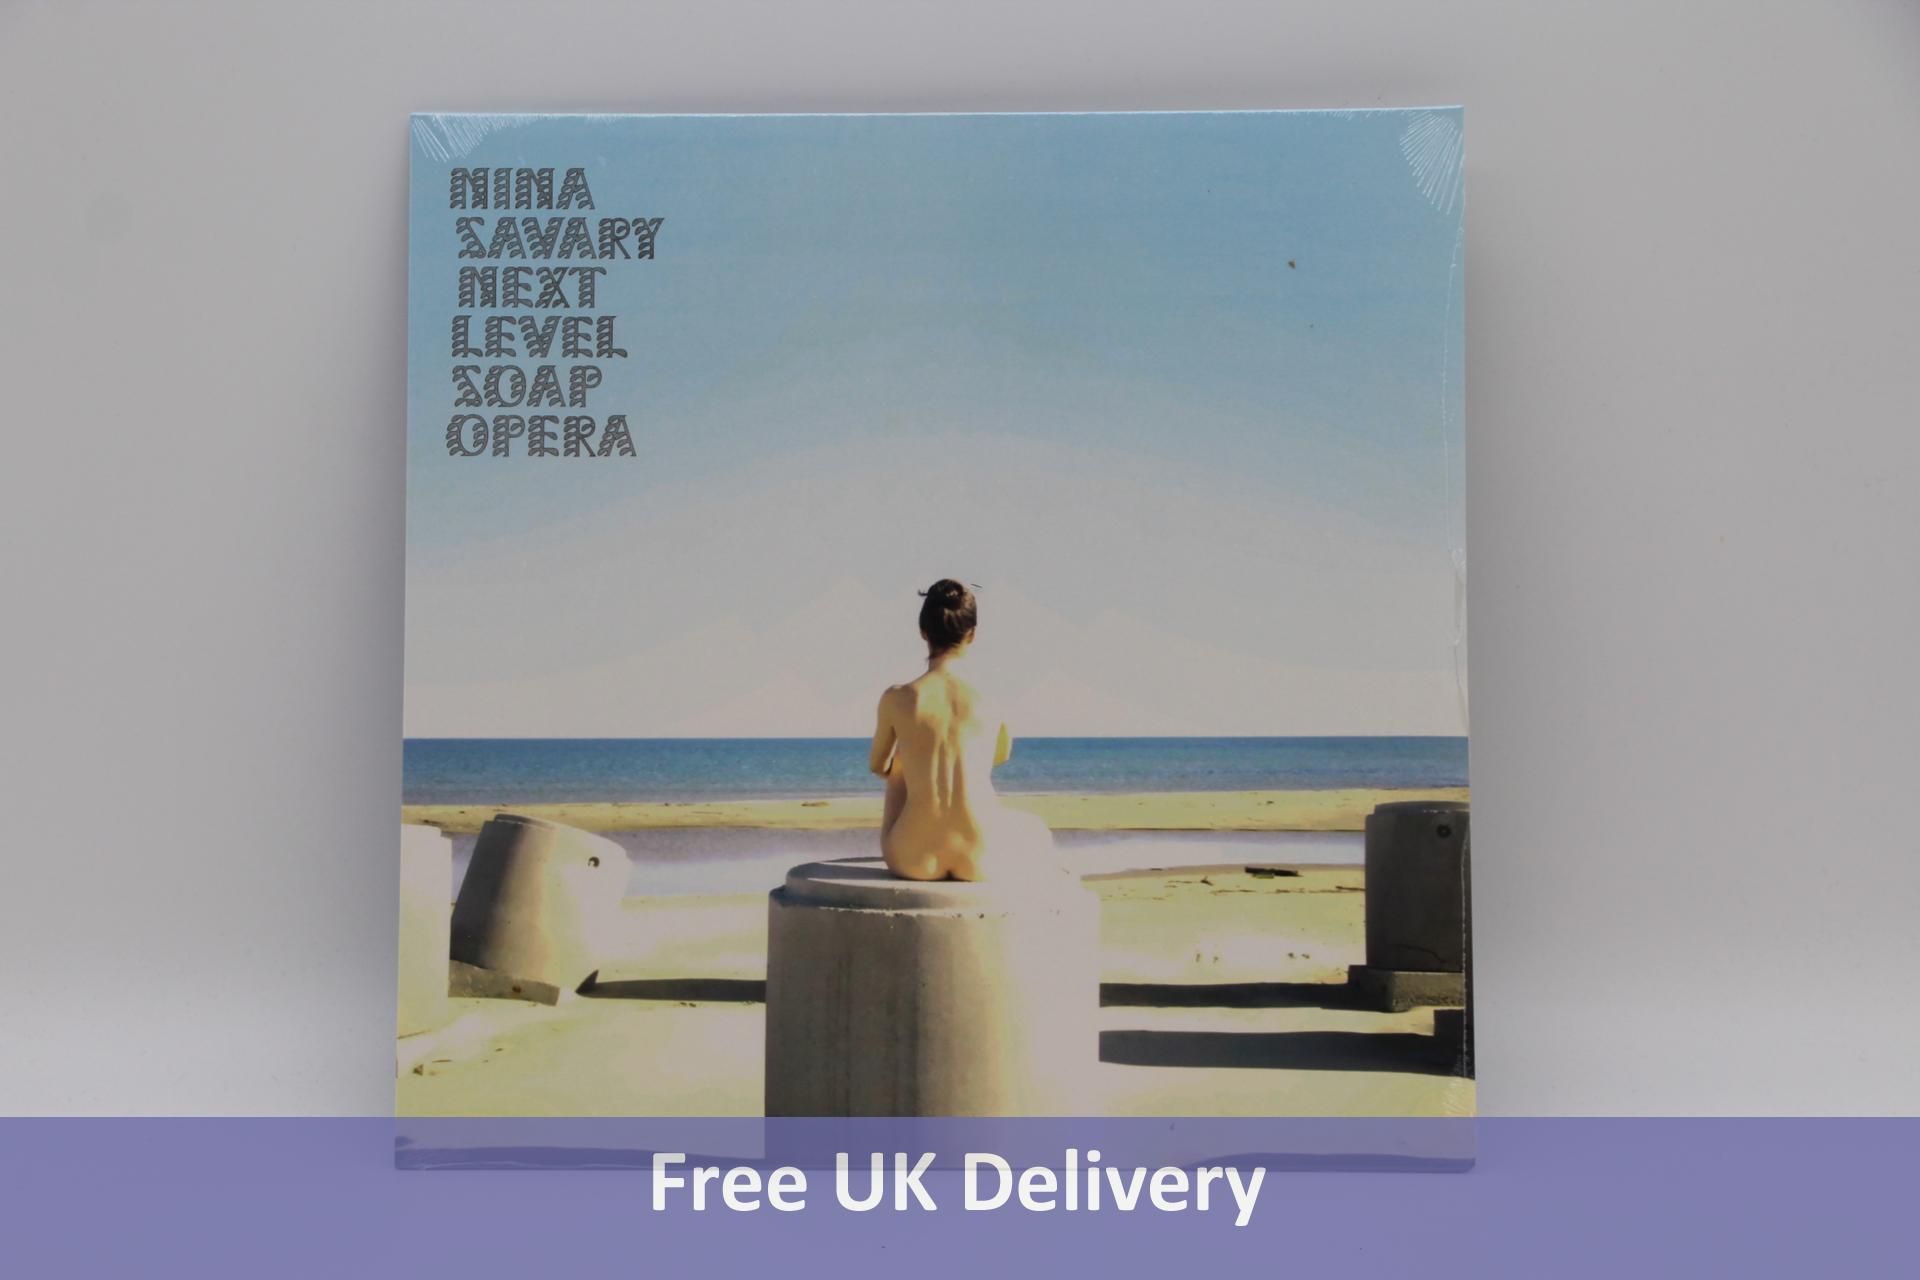 Twenty Nina Savery - Next Level Soap Opera 12" Vinyl Records